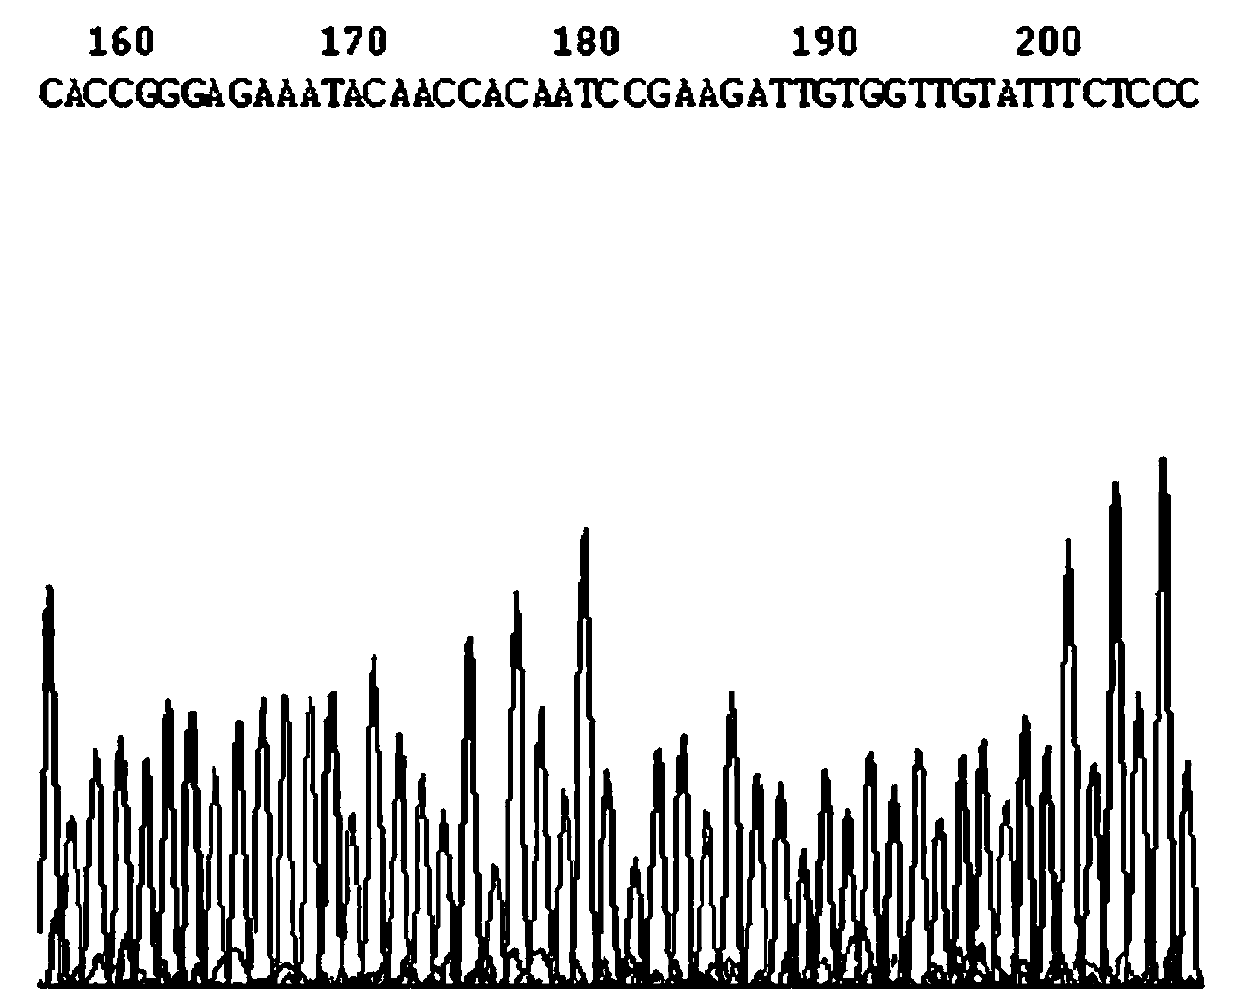 NS5B303shRNA (Short Hairclip Ribonucleic Acid) for inhibiting hog cholera virus replication and preparation method of NS5B303shRNA